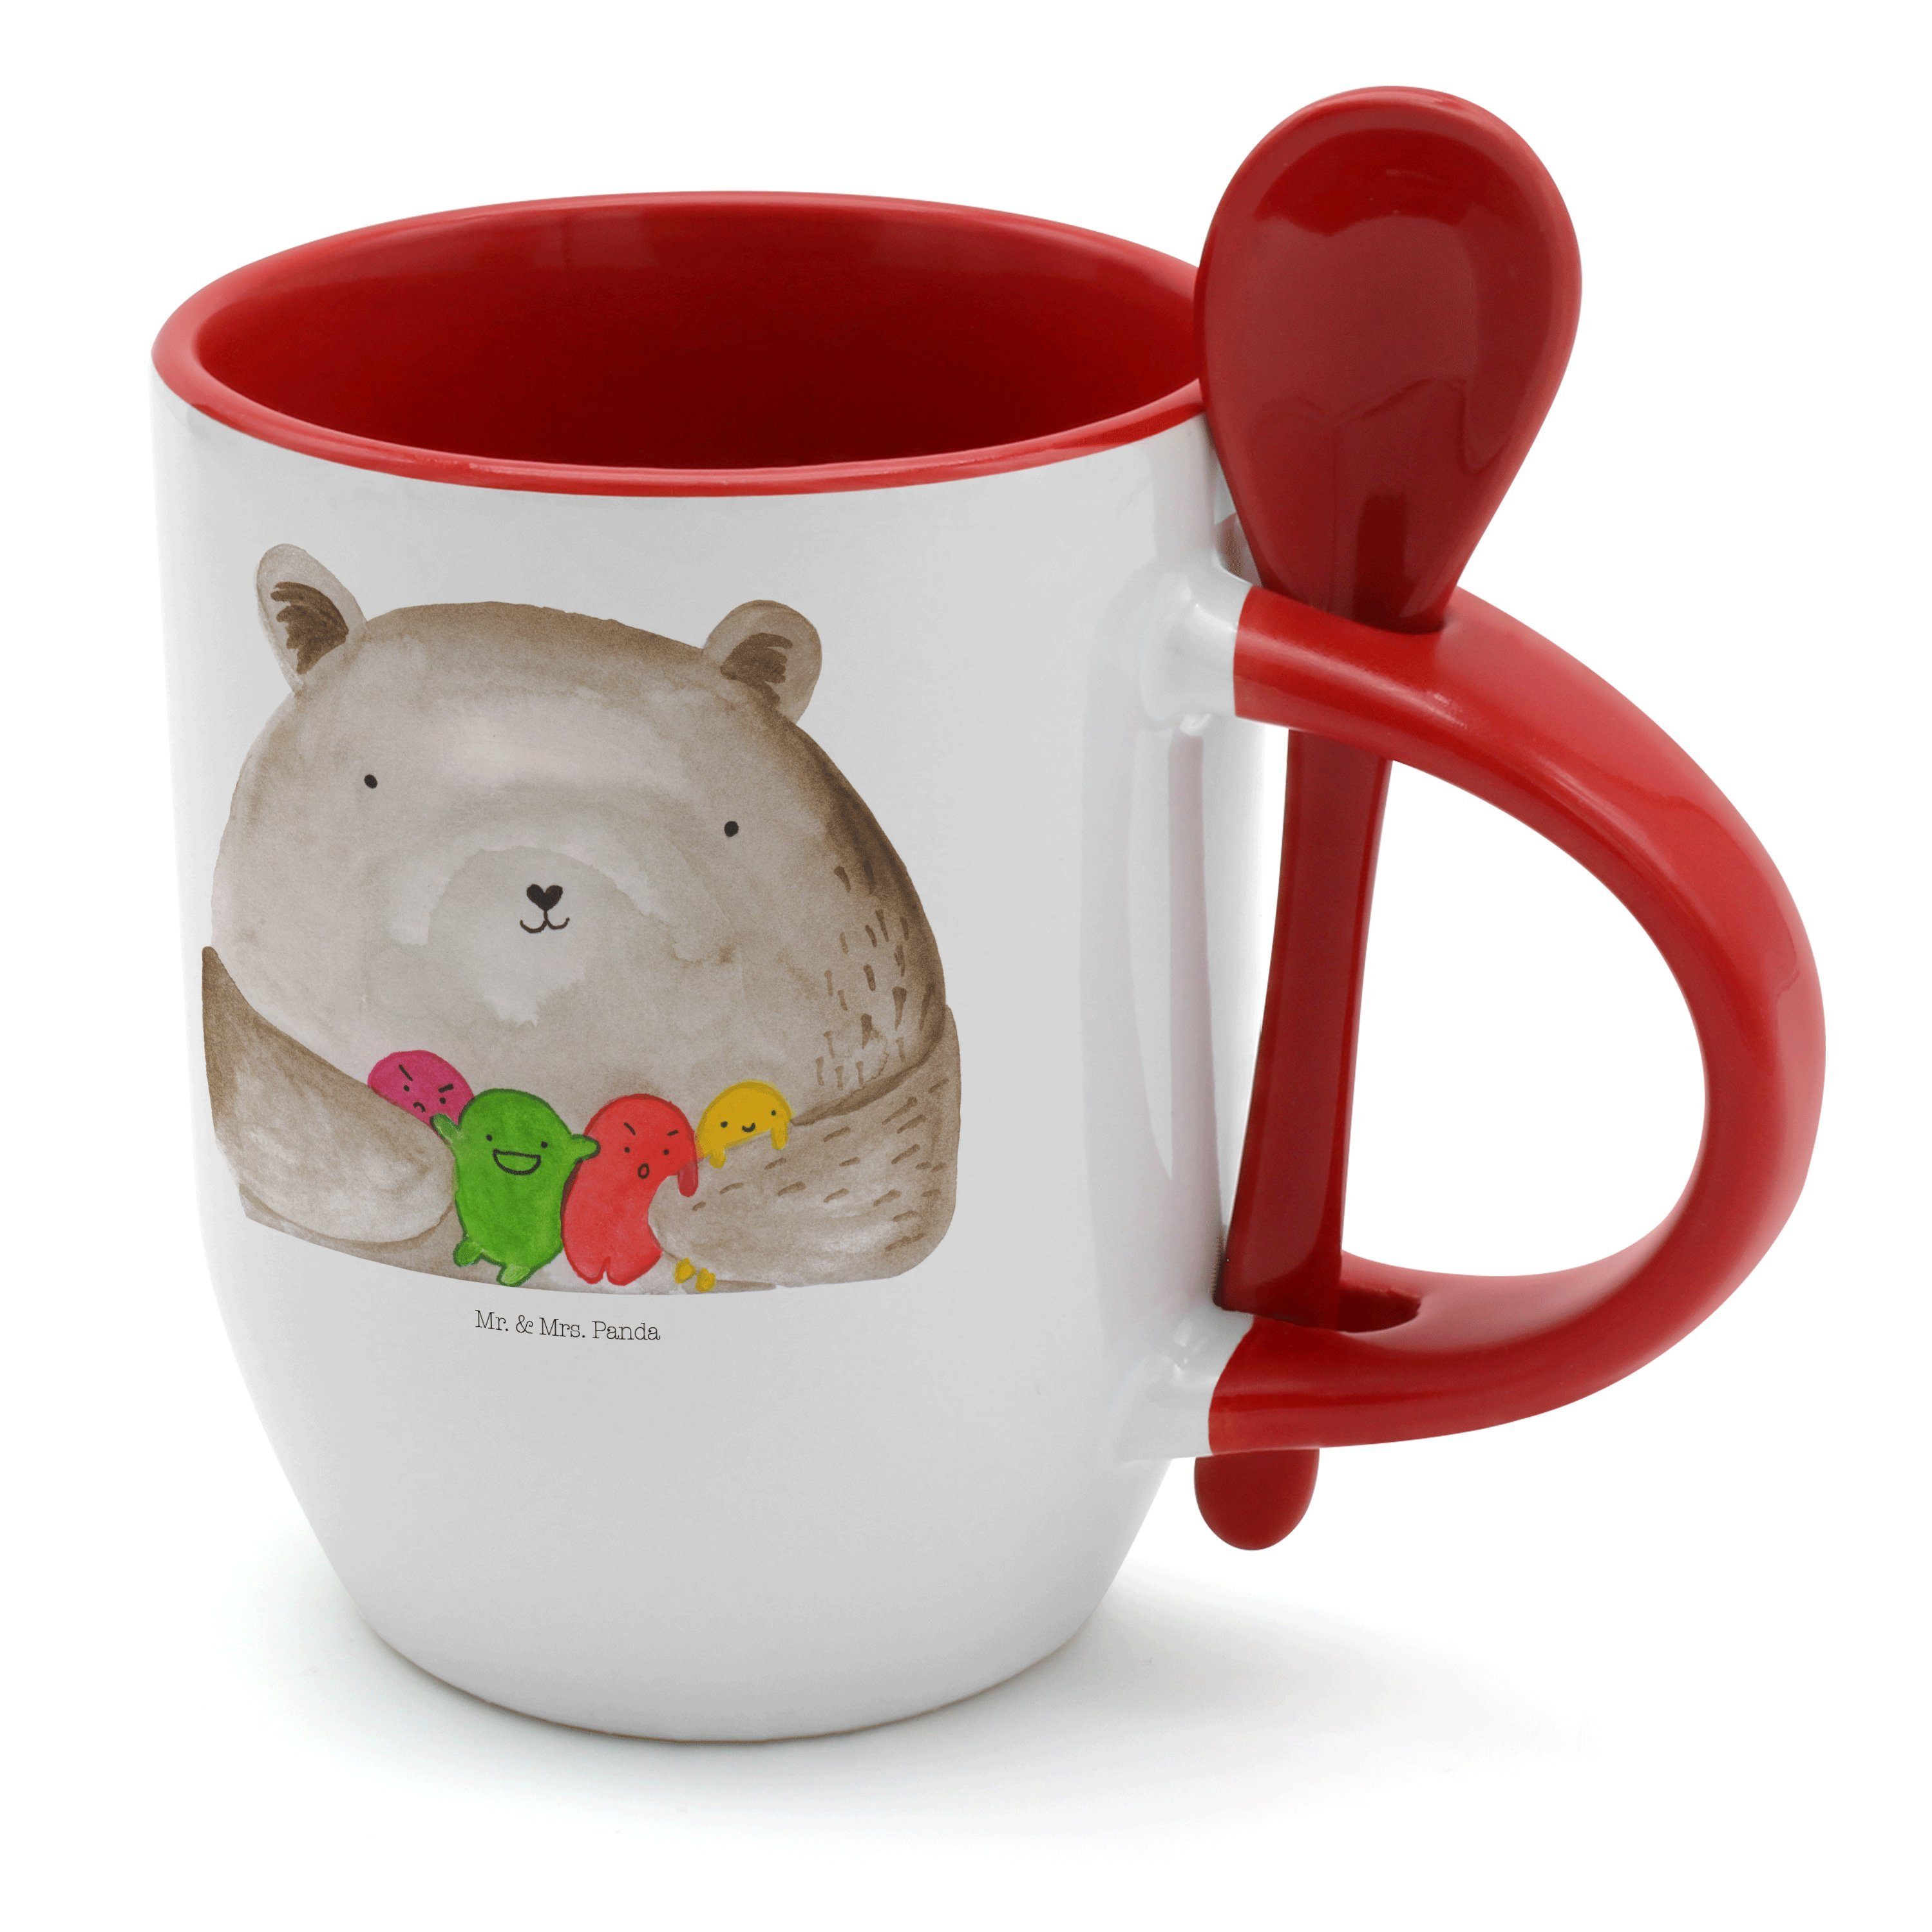 Mr. & Mrs. Panda Tasse Bär Gefühl - Weiß - Geschenk, Teddy, Kaffeetasse, Durchgedreht, Teddy, Keramik